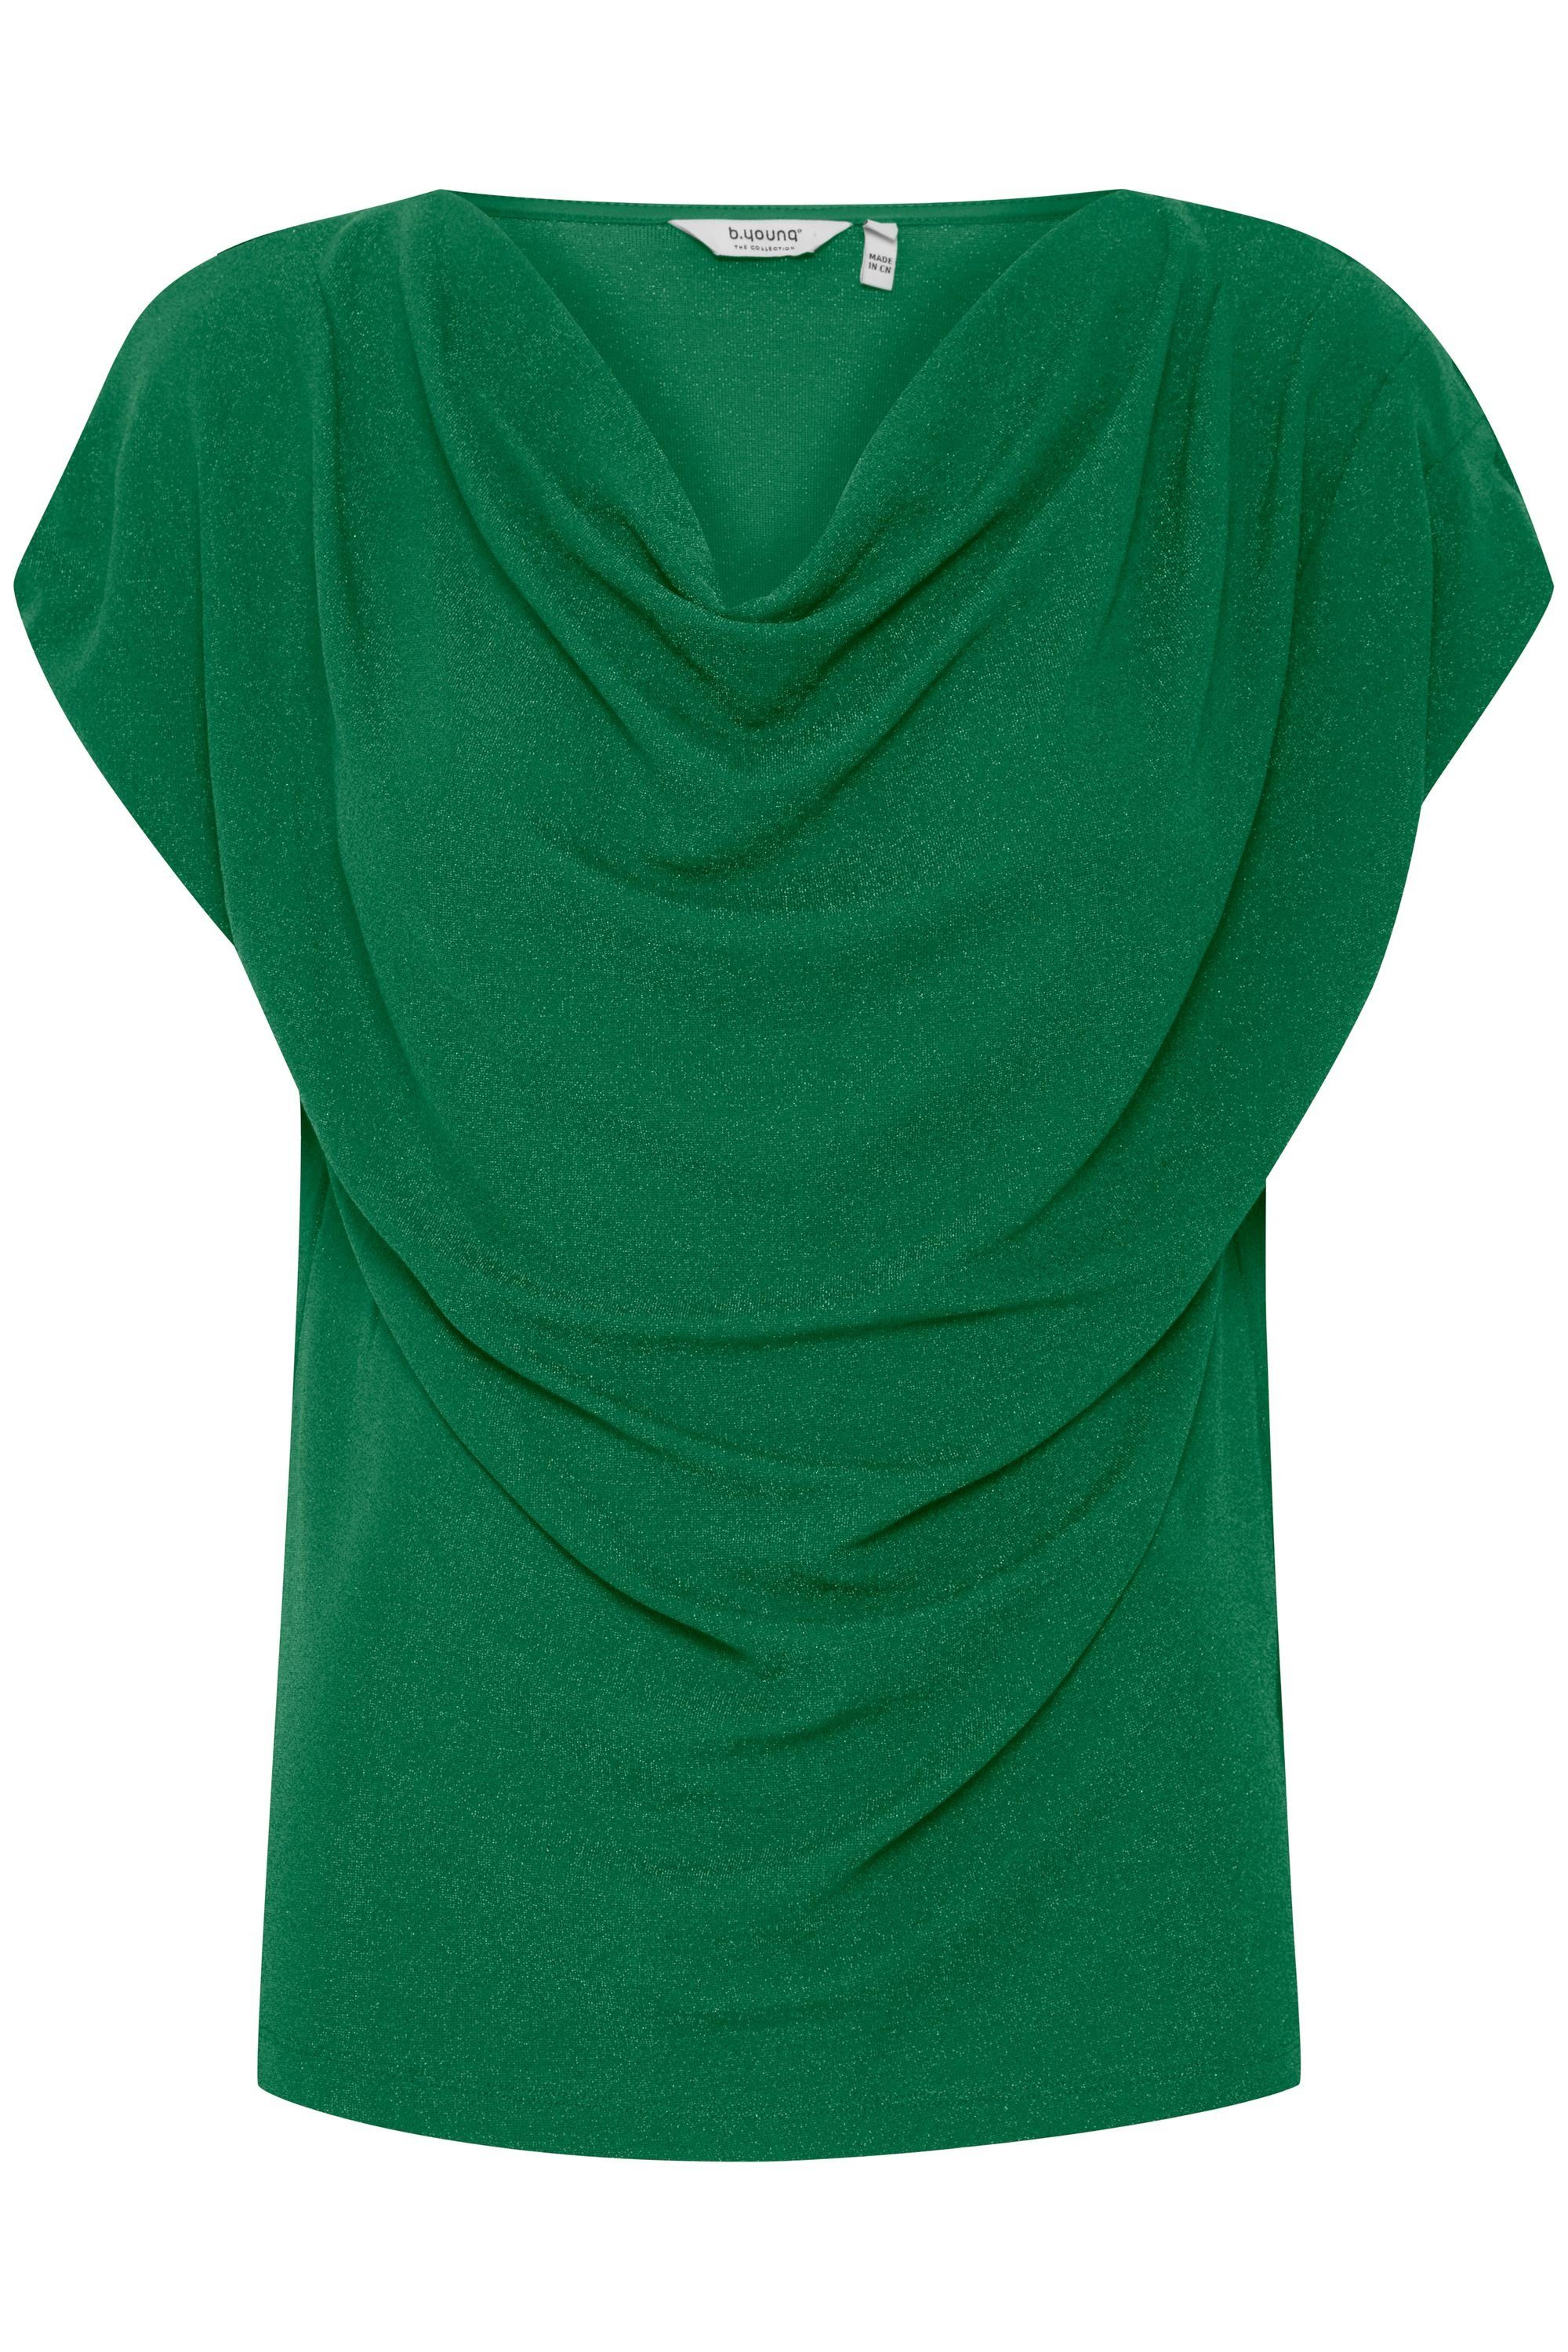 b.young Ultramarine - WATERFALL BYSELINA (185338) 20812560 Green A T-Shirt